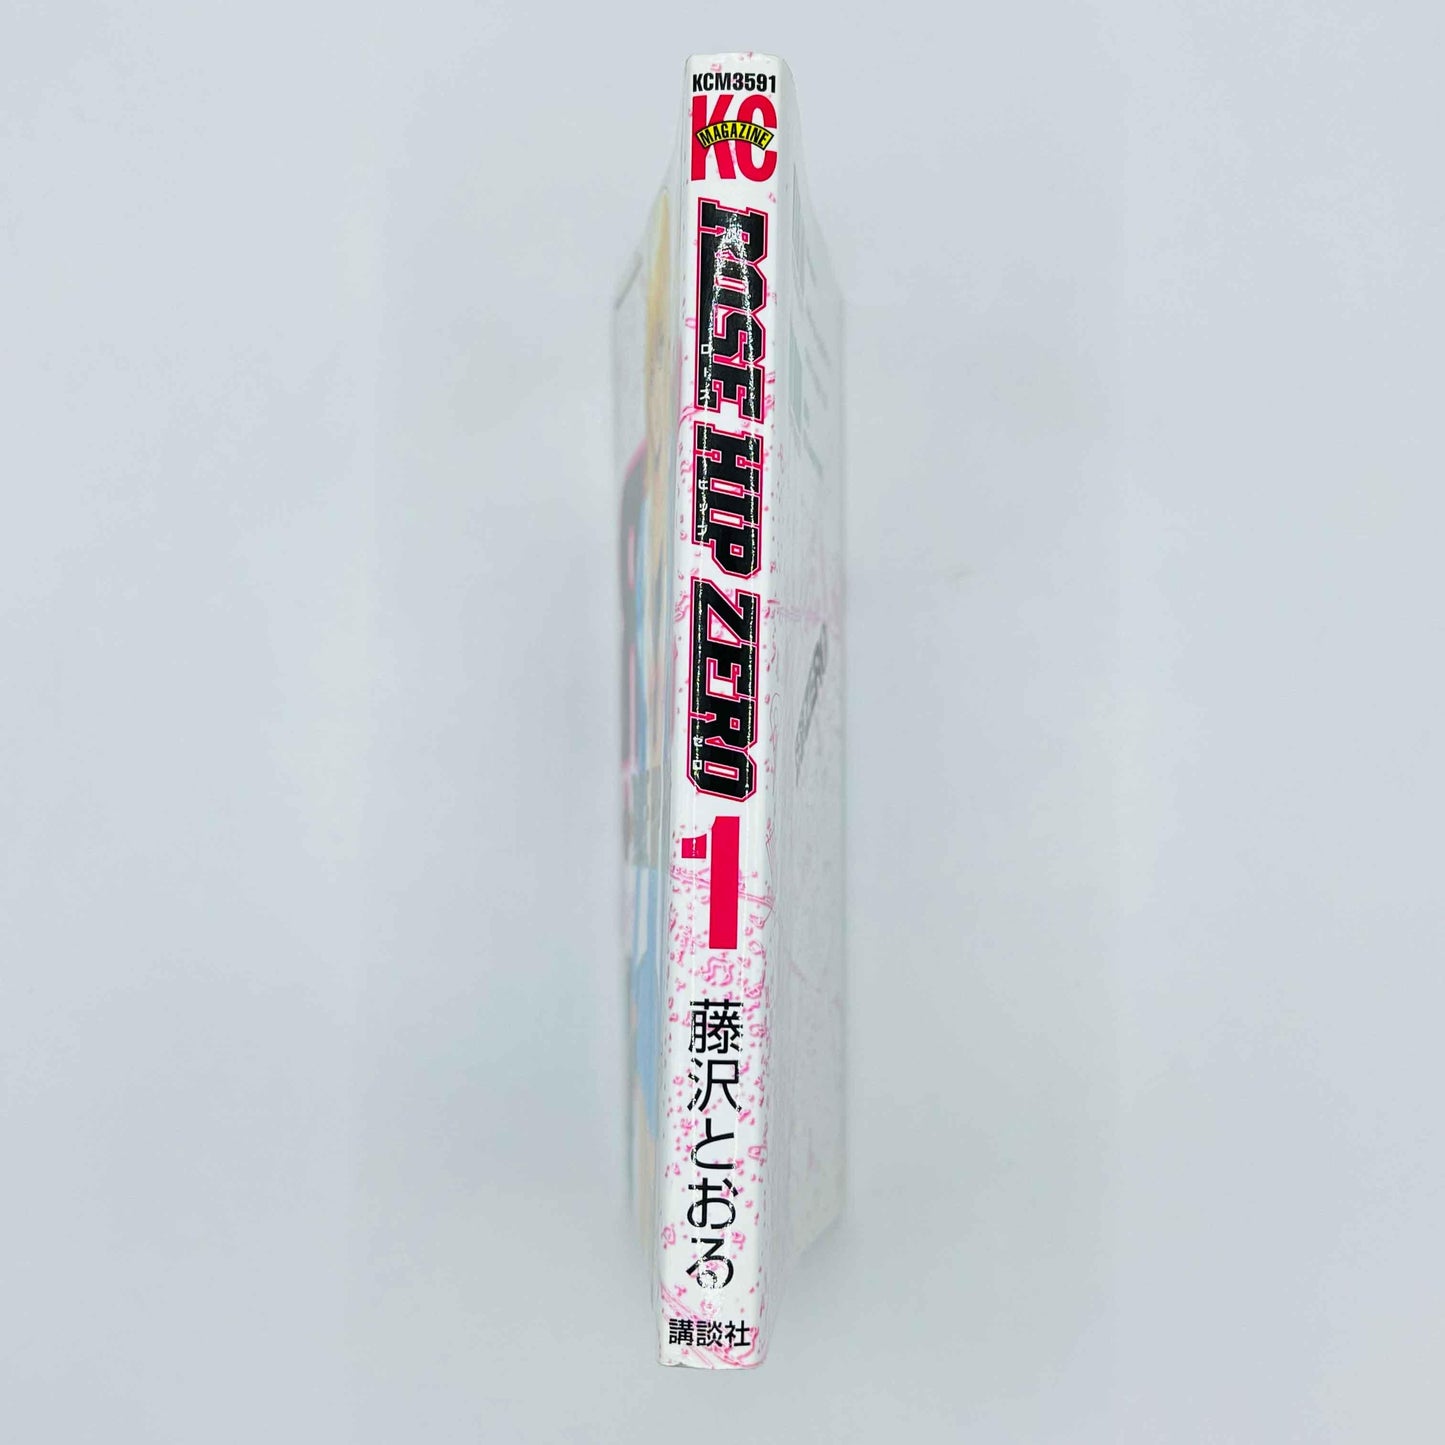 Rose Hip Zero - Volume 01 - 1stPrint.net - 1st First Print Edition Manga Store - M-ROSEHIP0-01-001